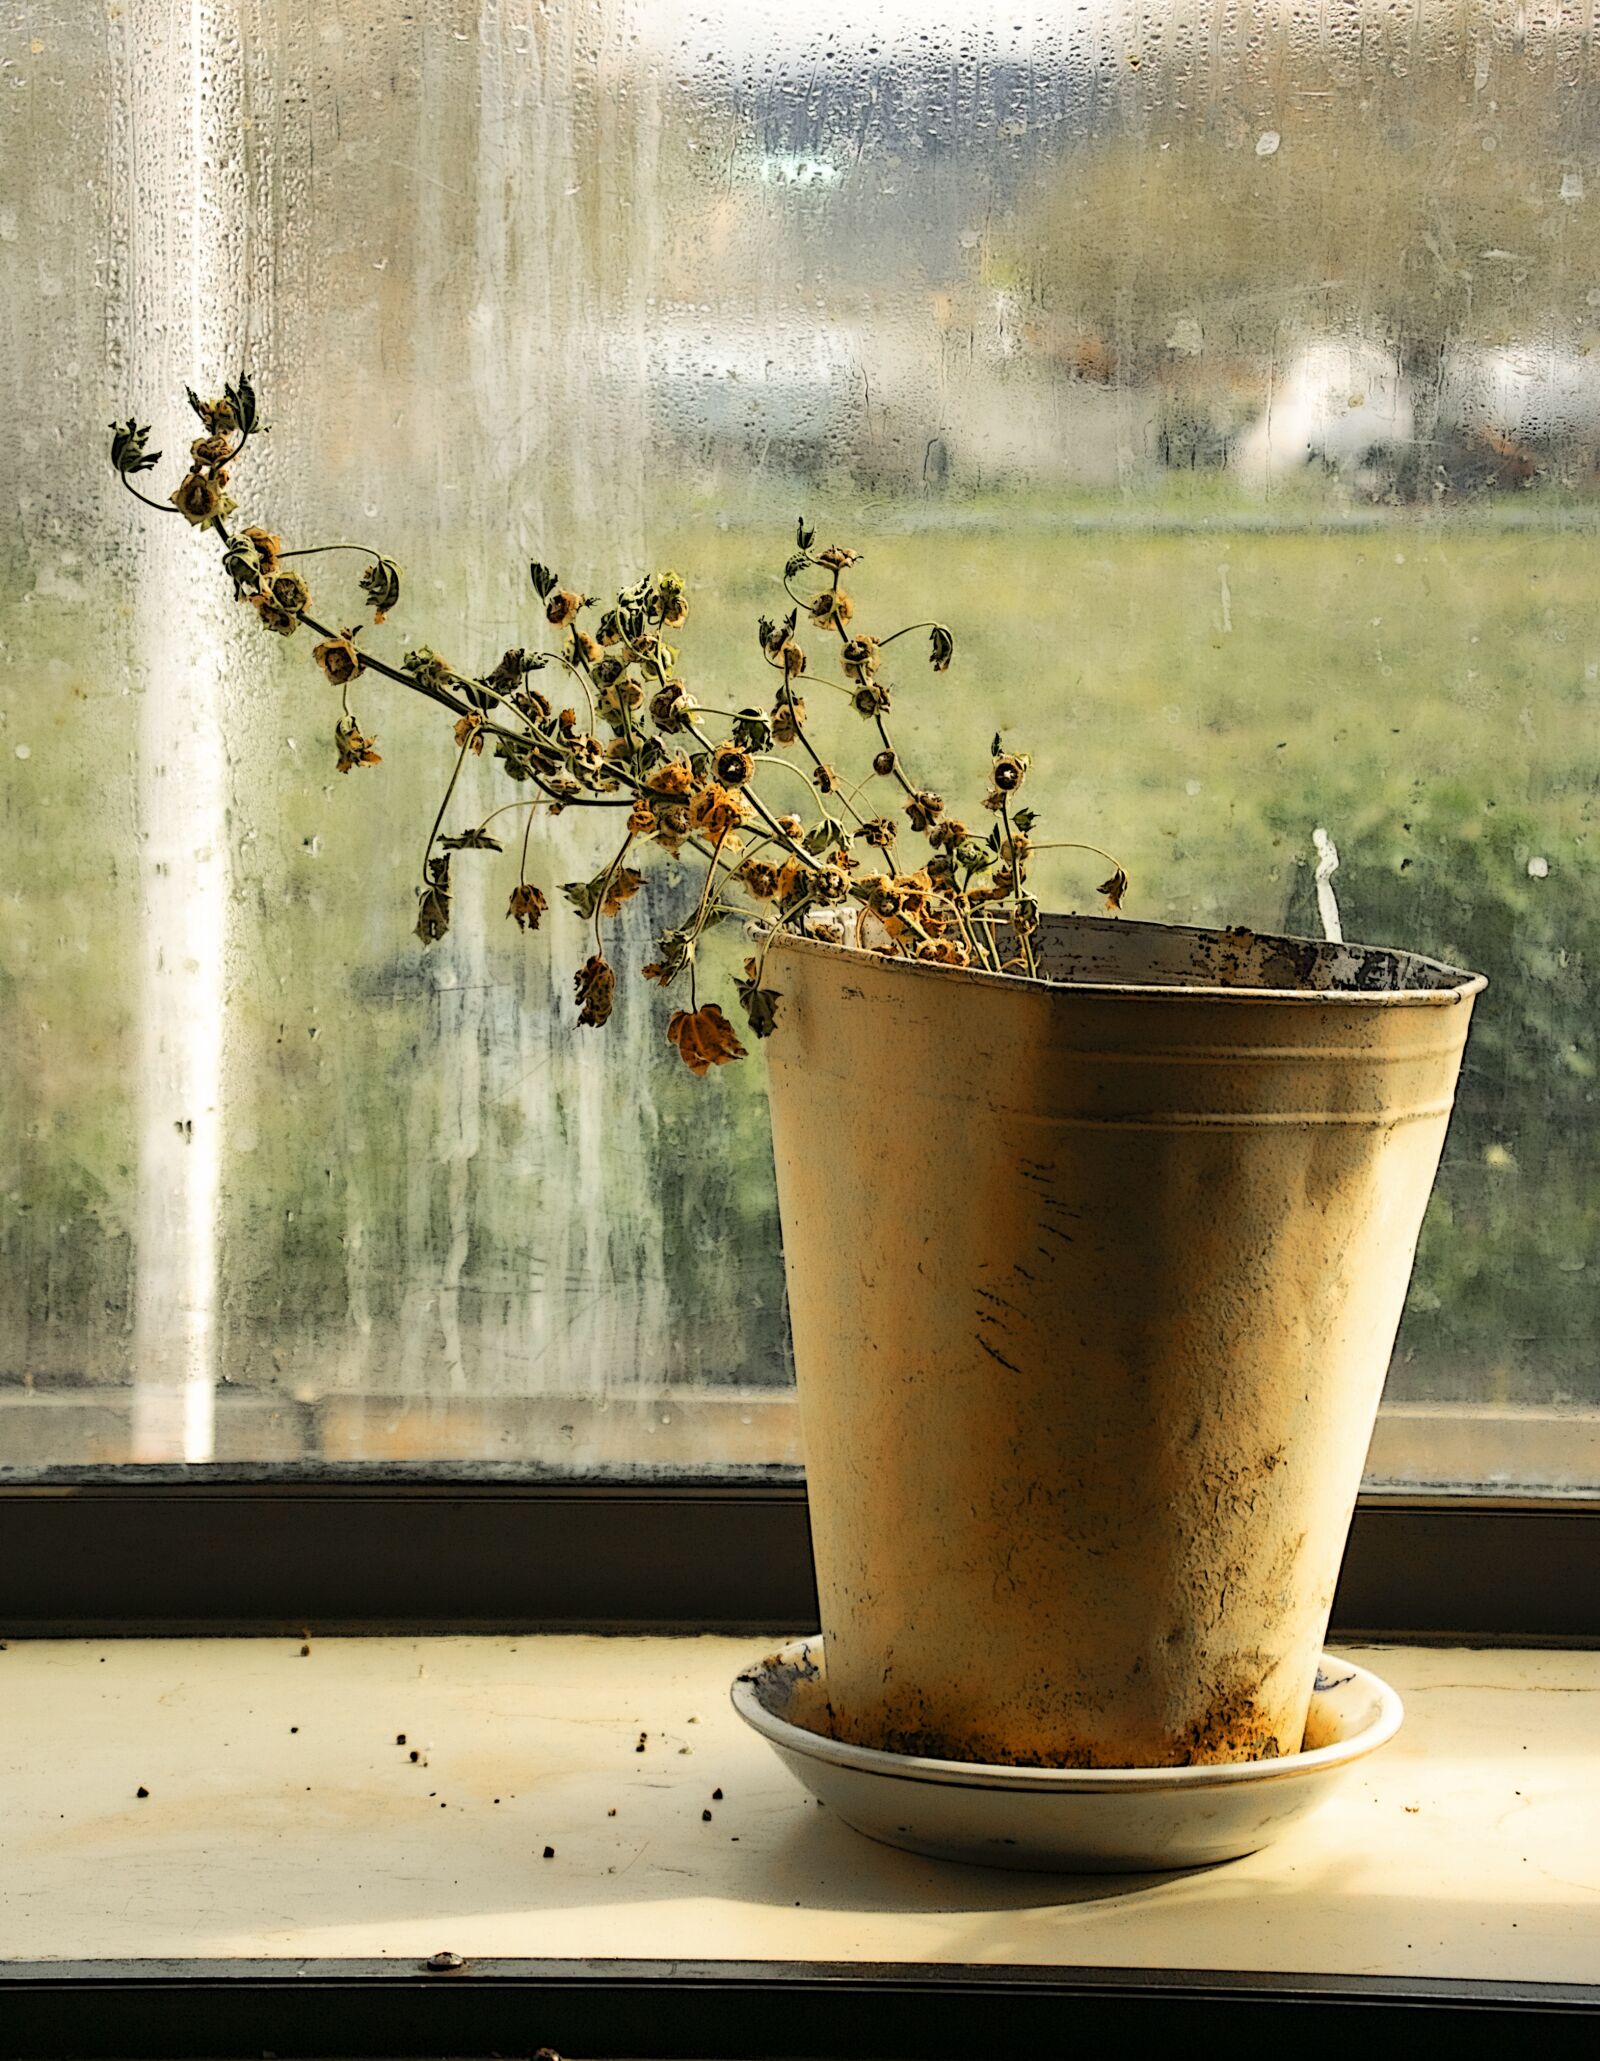 Nikon 1 J4 sample photo. Kitchen window, flowers, dying photography